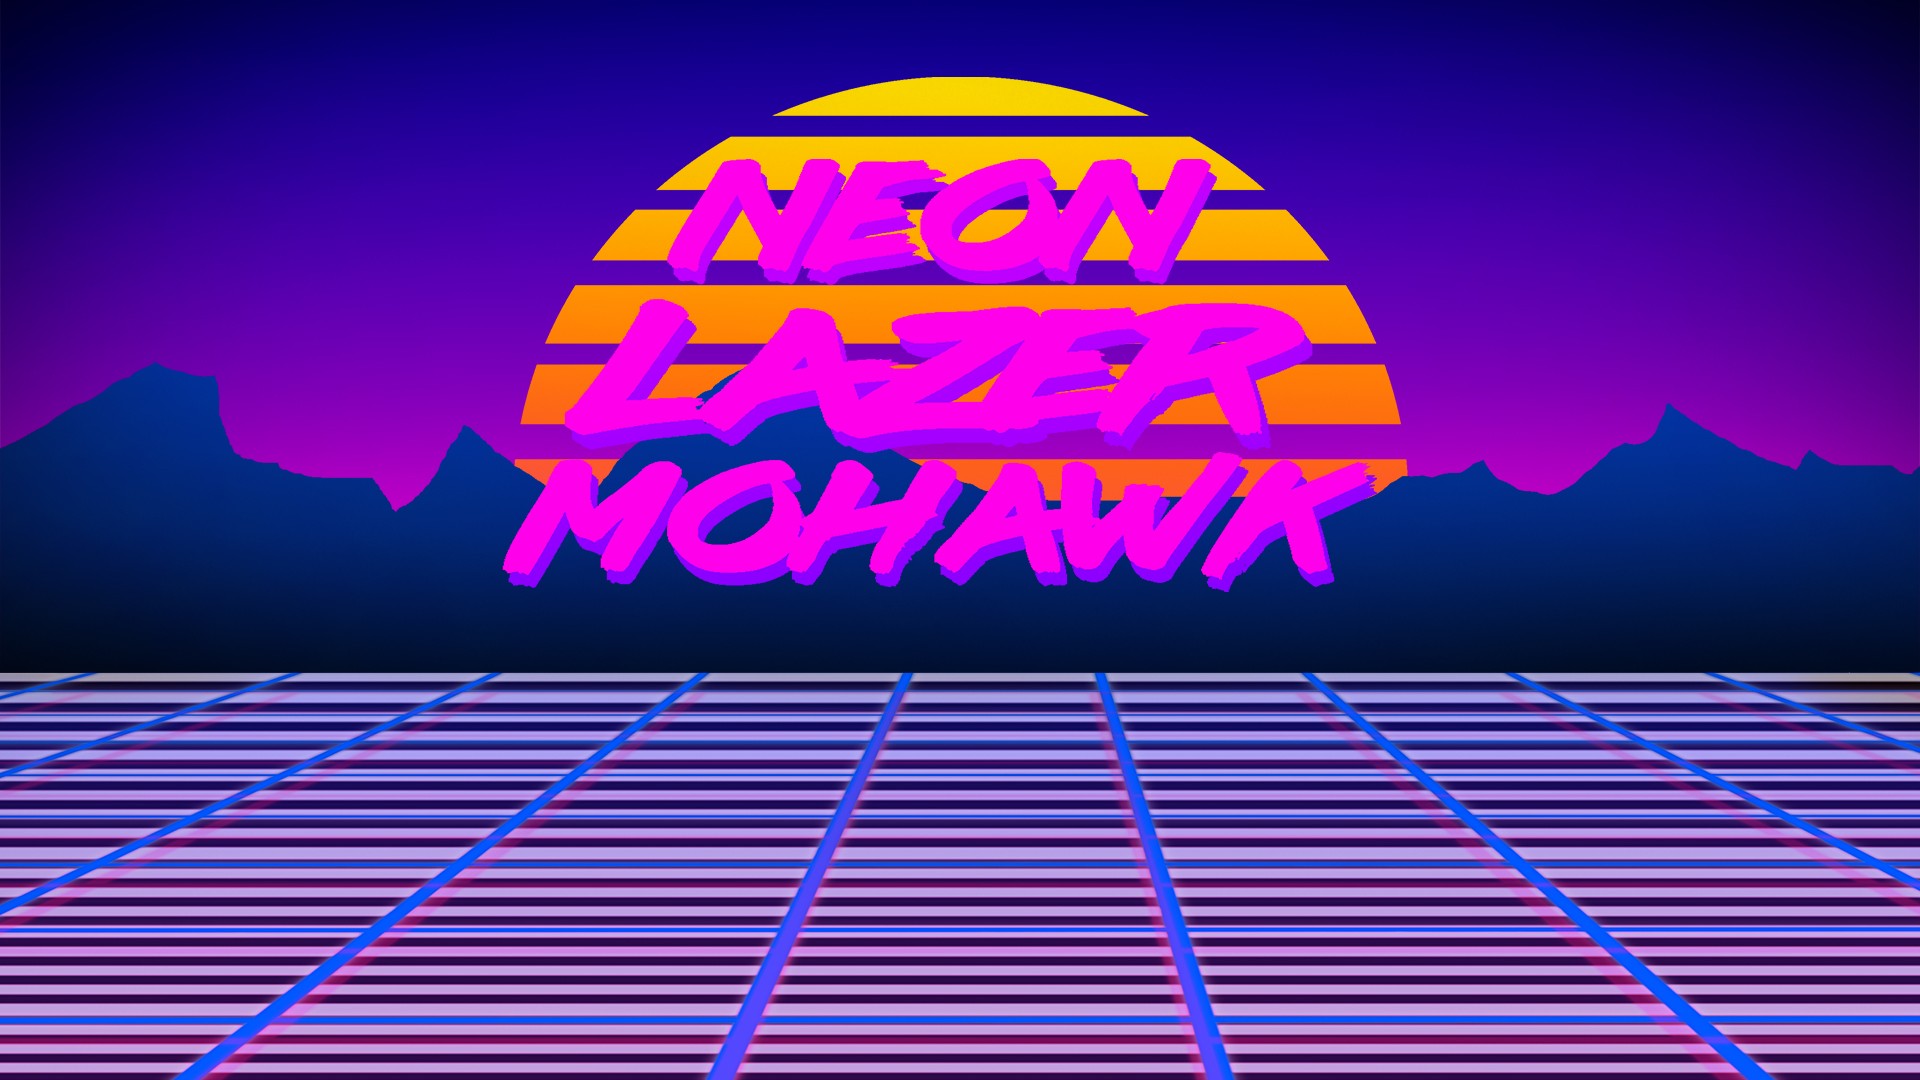 Neon Lazer Mohawk, 1980s, Retro games, Robot, Grid, Digital art, Sunset, Sun, Colorful, Text Wallpaper